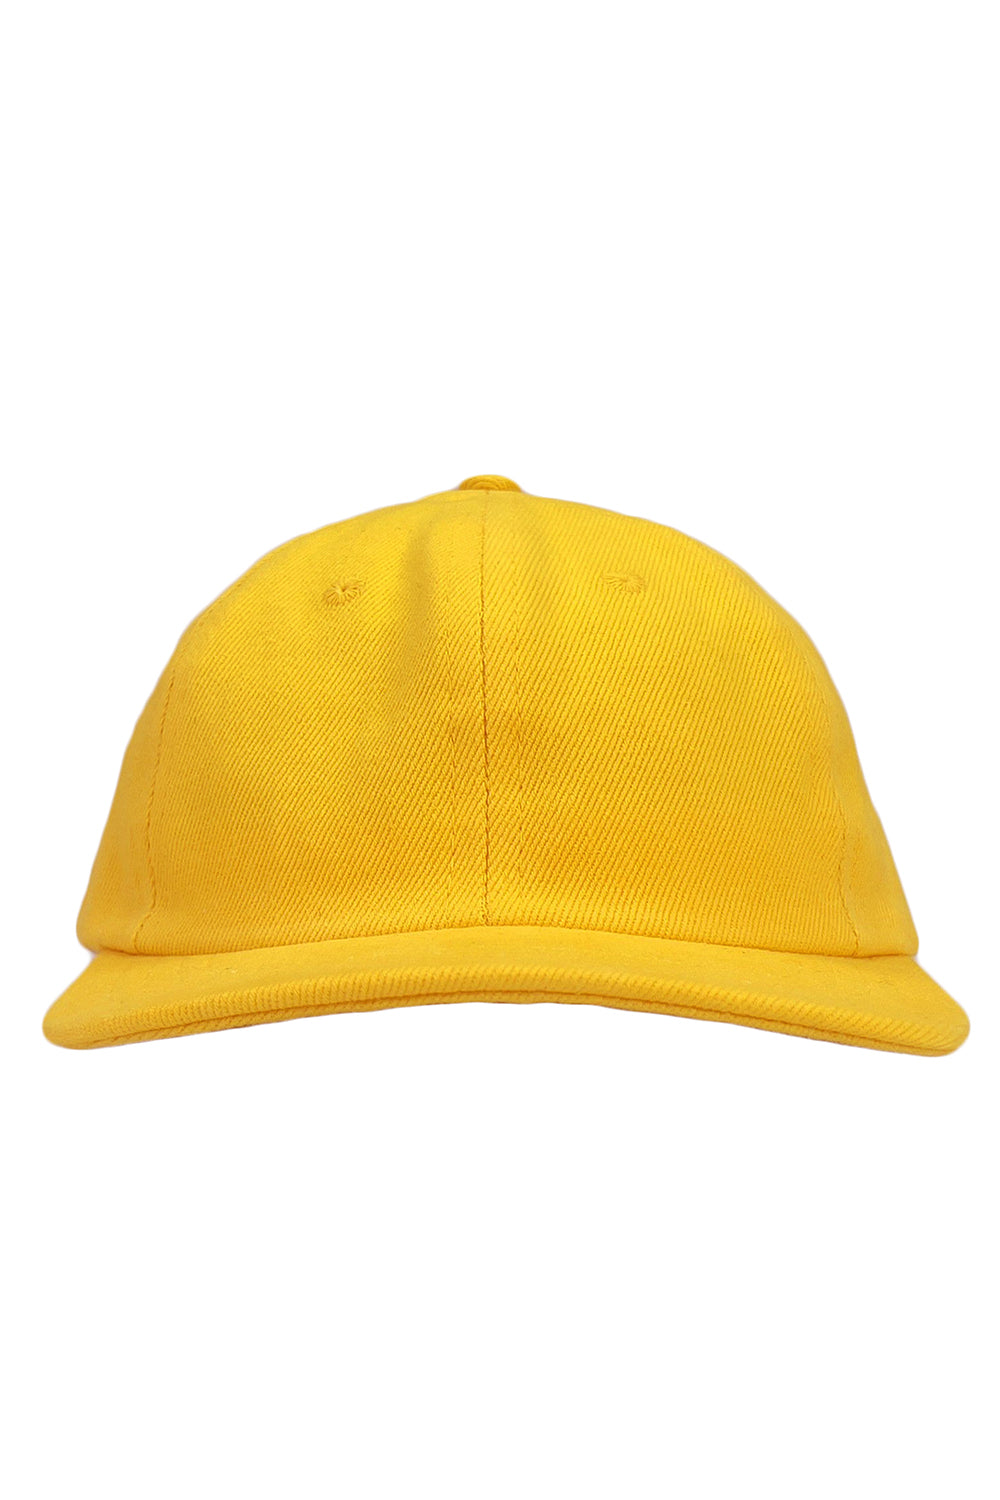 Chenga Twill Cap | Jungmaven Hemp Clothing & Accessories / Color: Sunshine Yellow